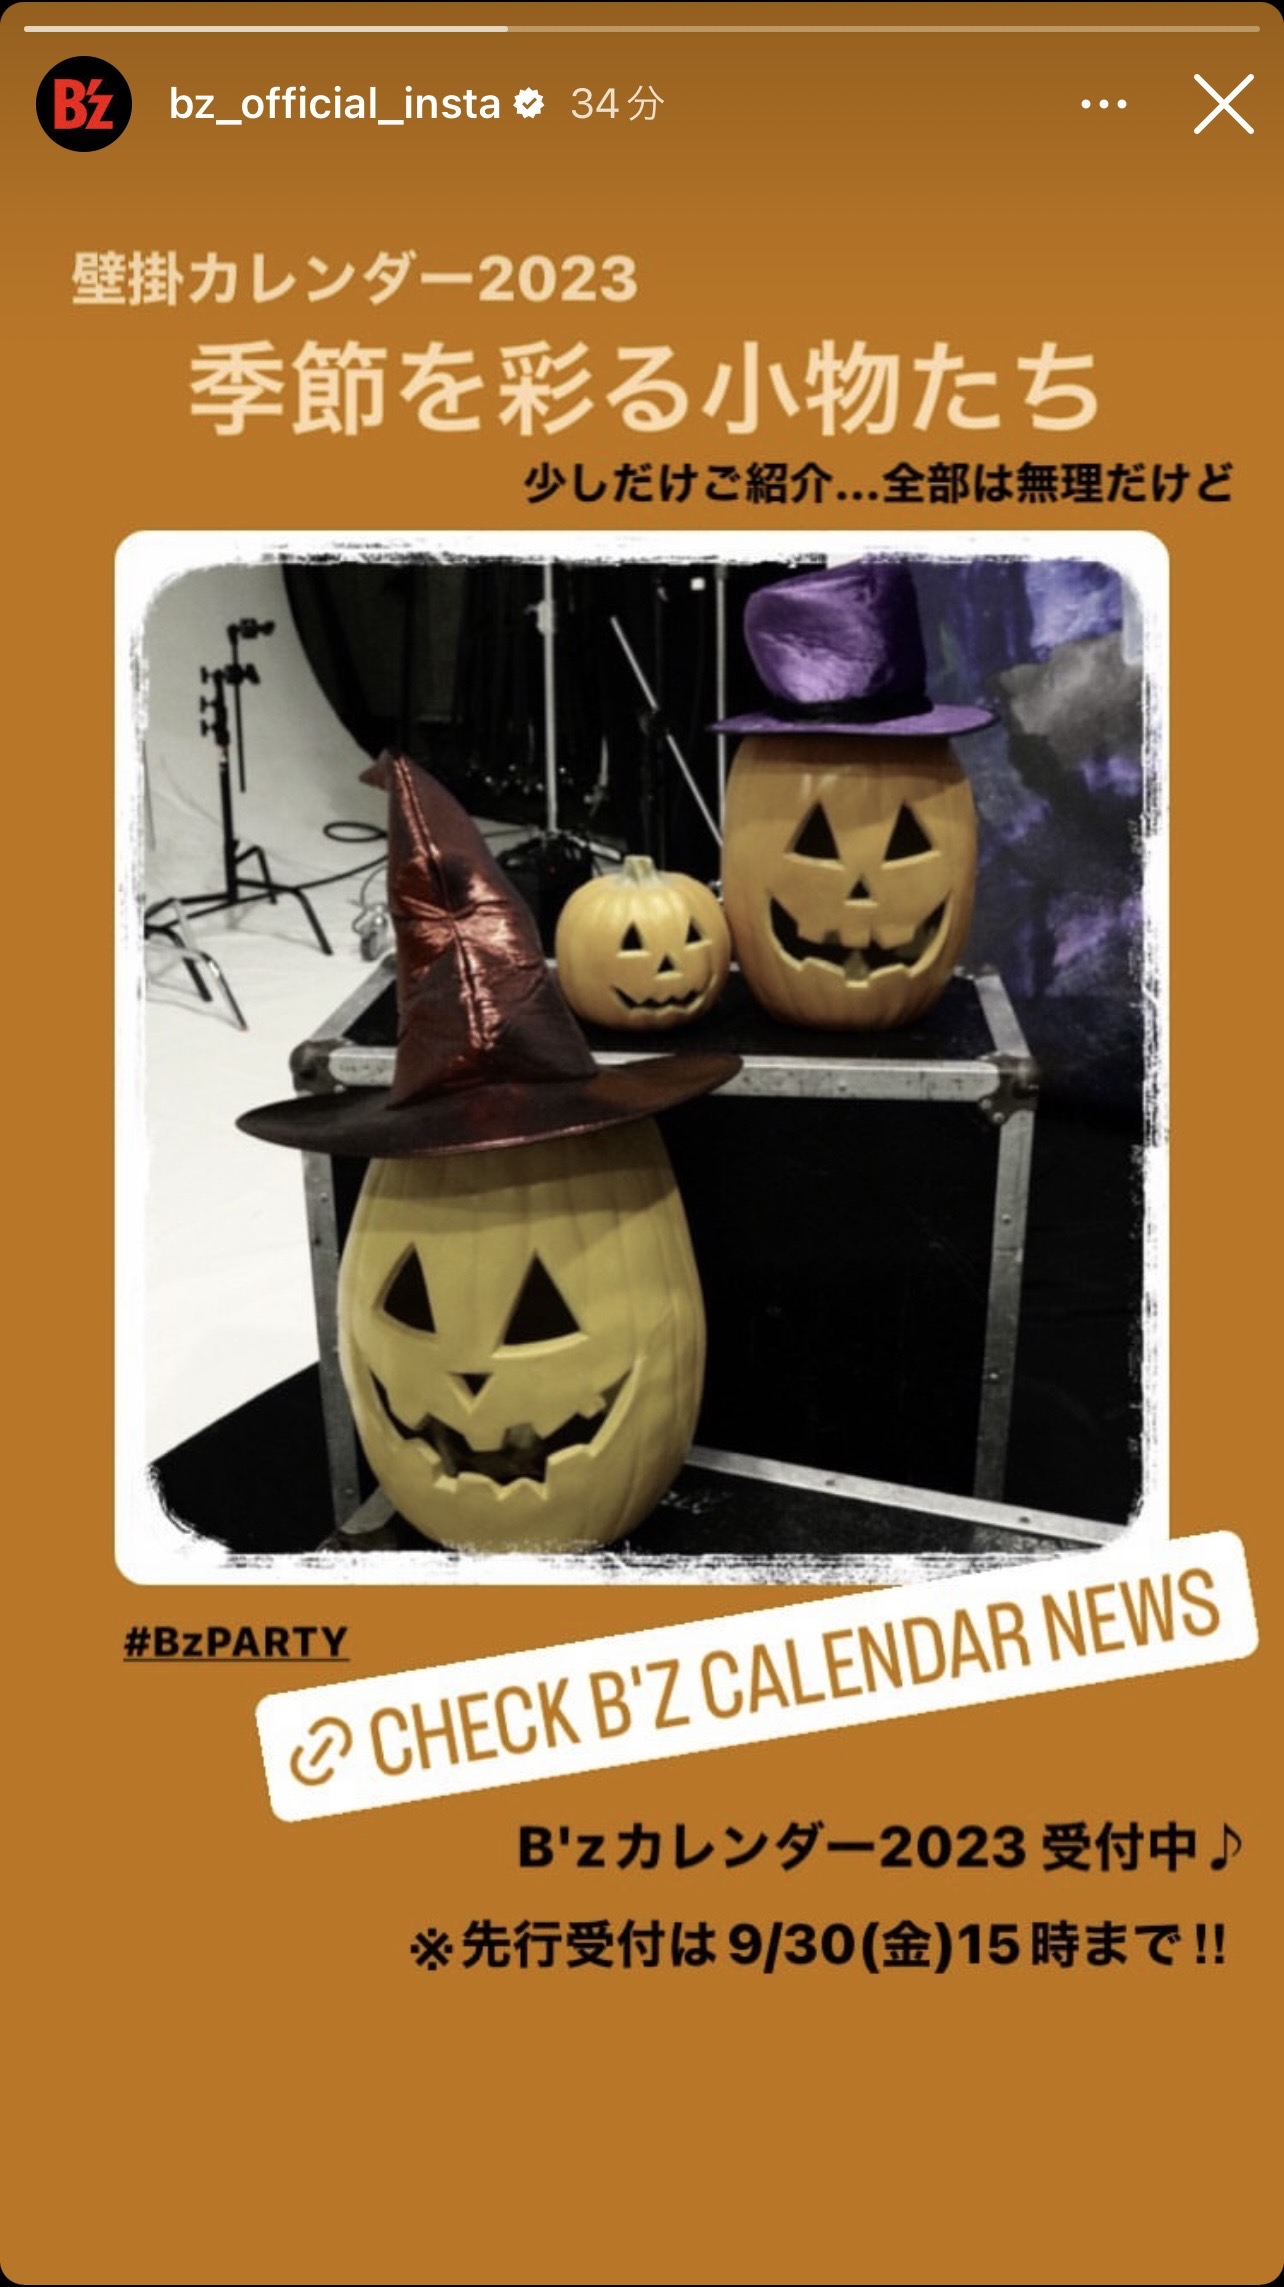 B'z公式Instagramに投稿された2023年版カレンダーの小物の写真